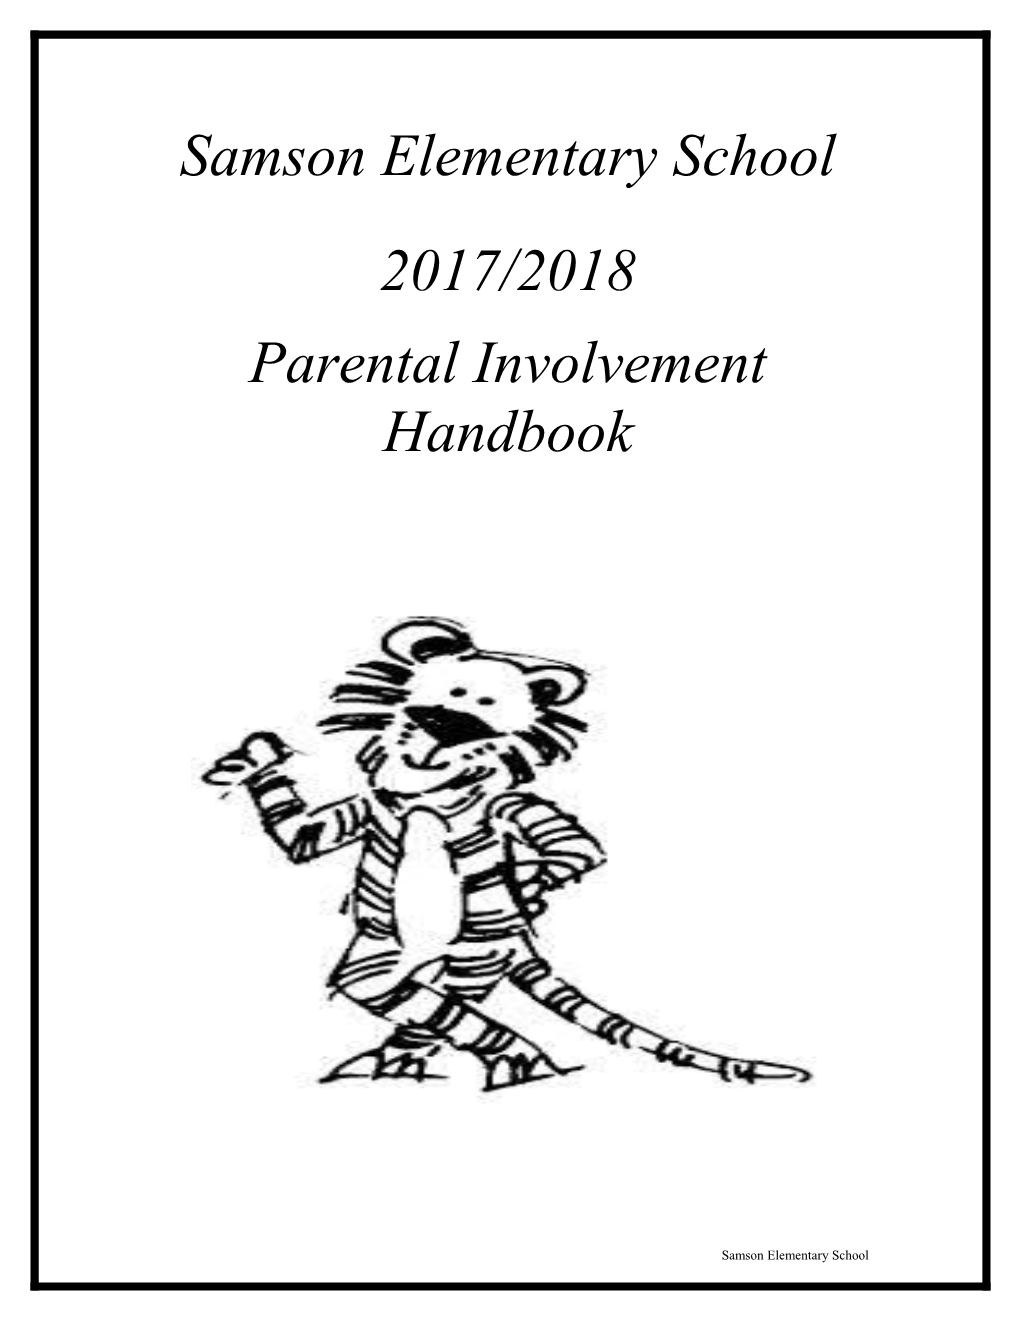 Samson Elementary School